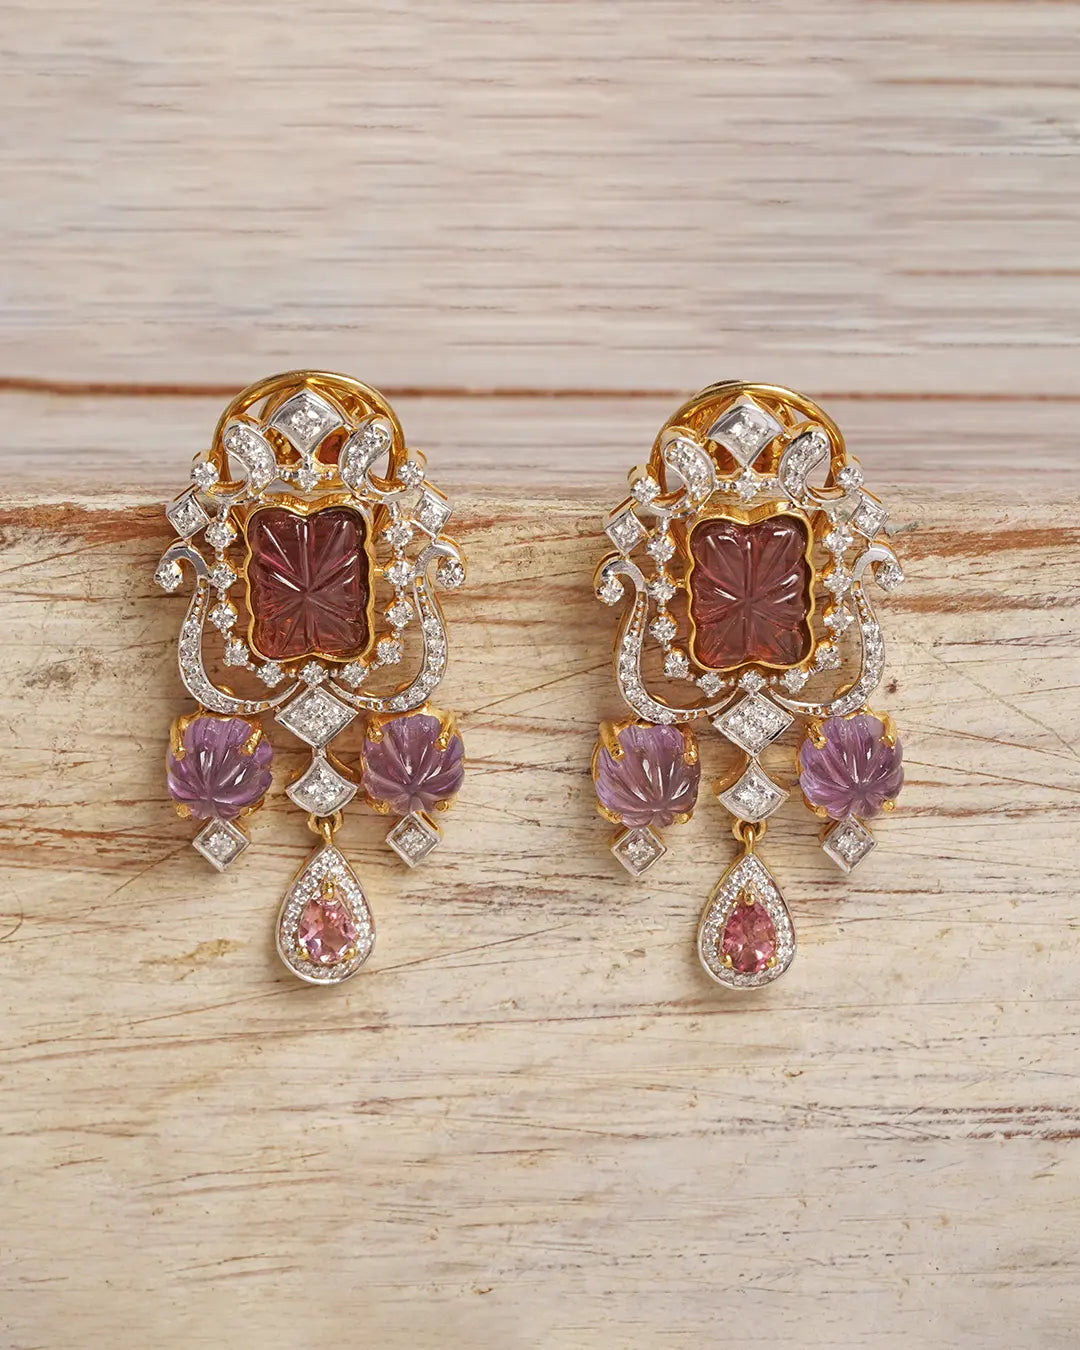  gold Indian earrings